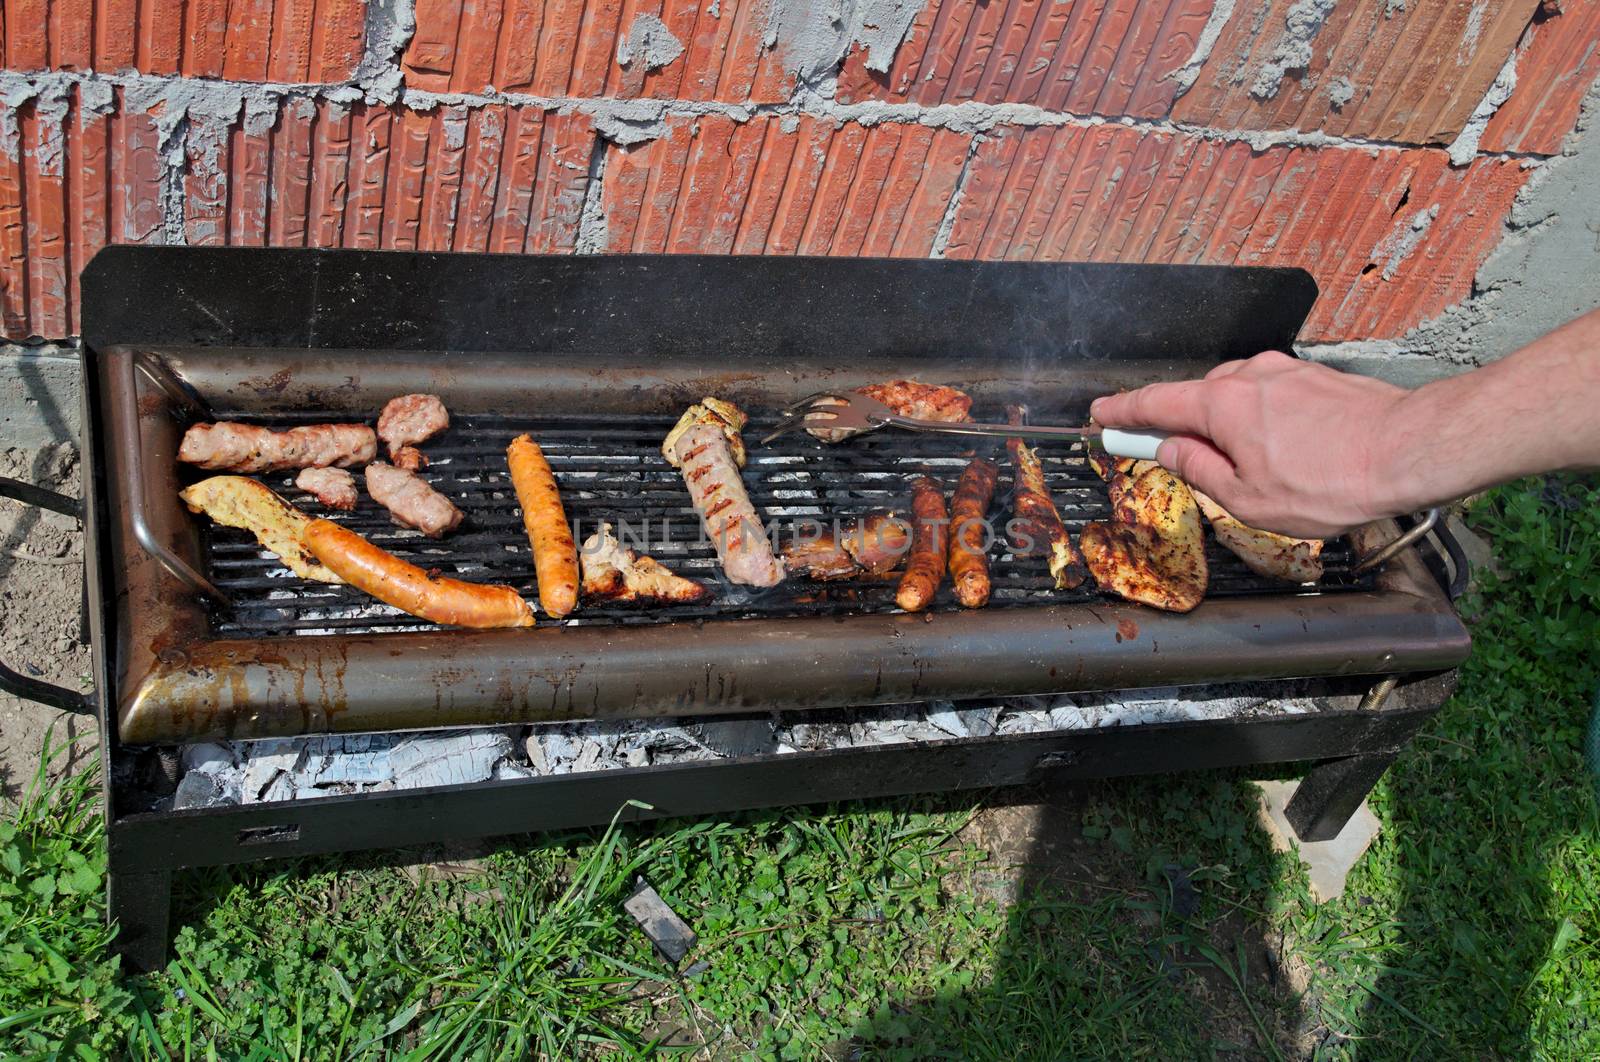 Family Sunday barbecue by sheriffkule